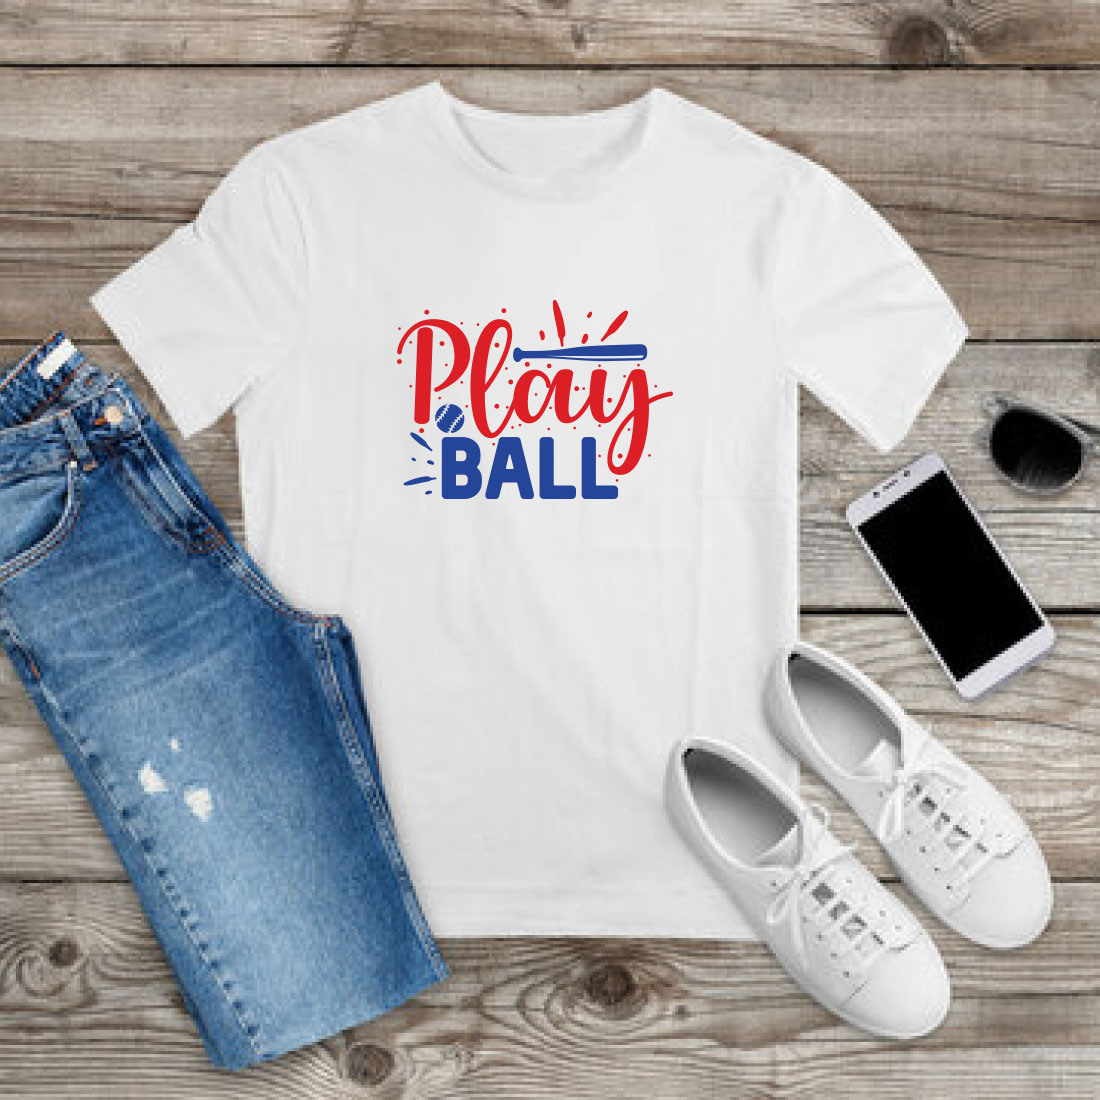 Baseball SVG T-shirt Design Bundle Vol-07 preview image.